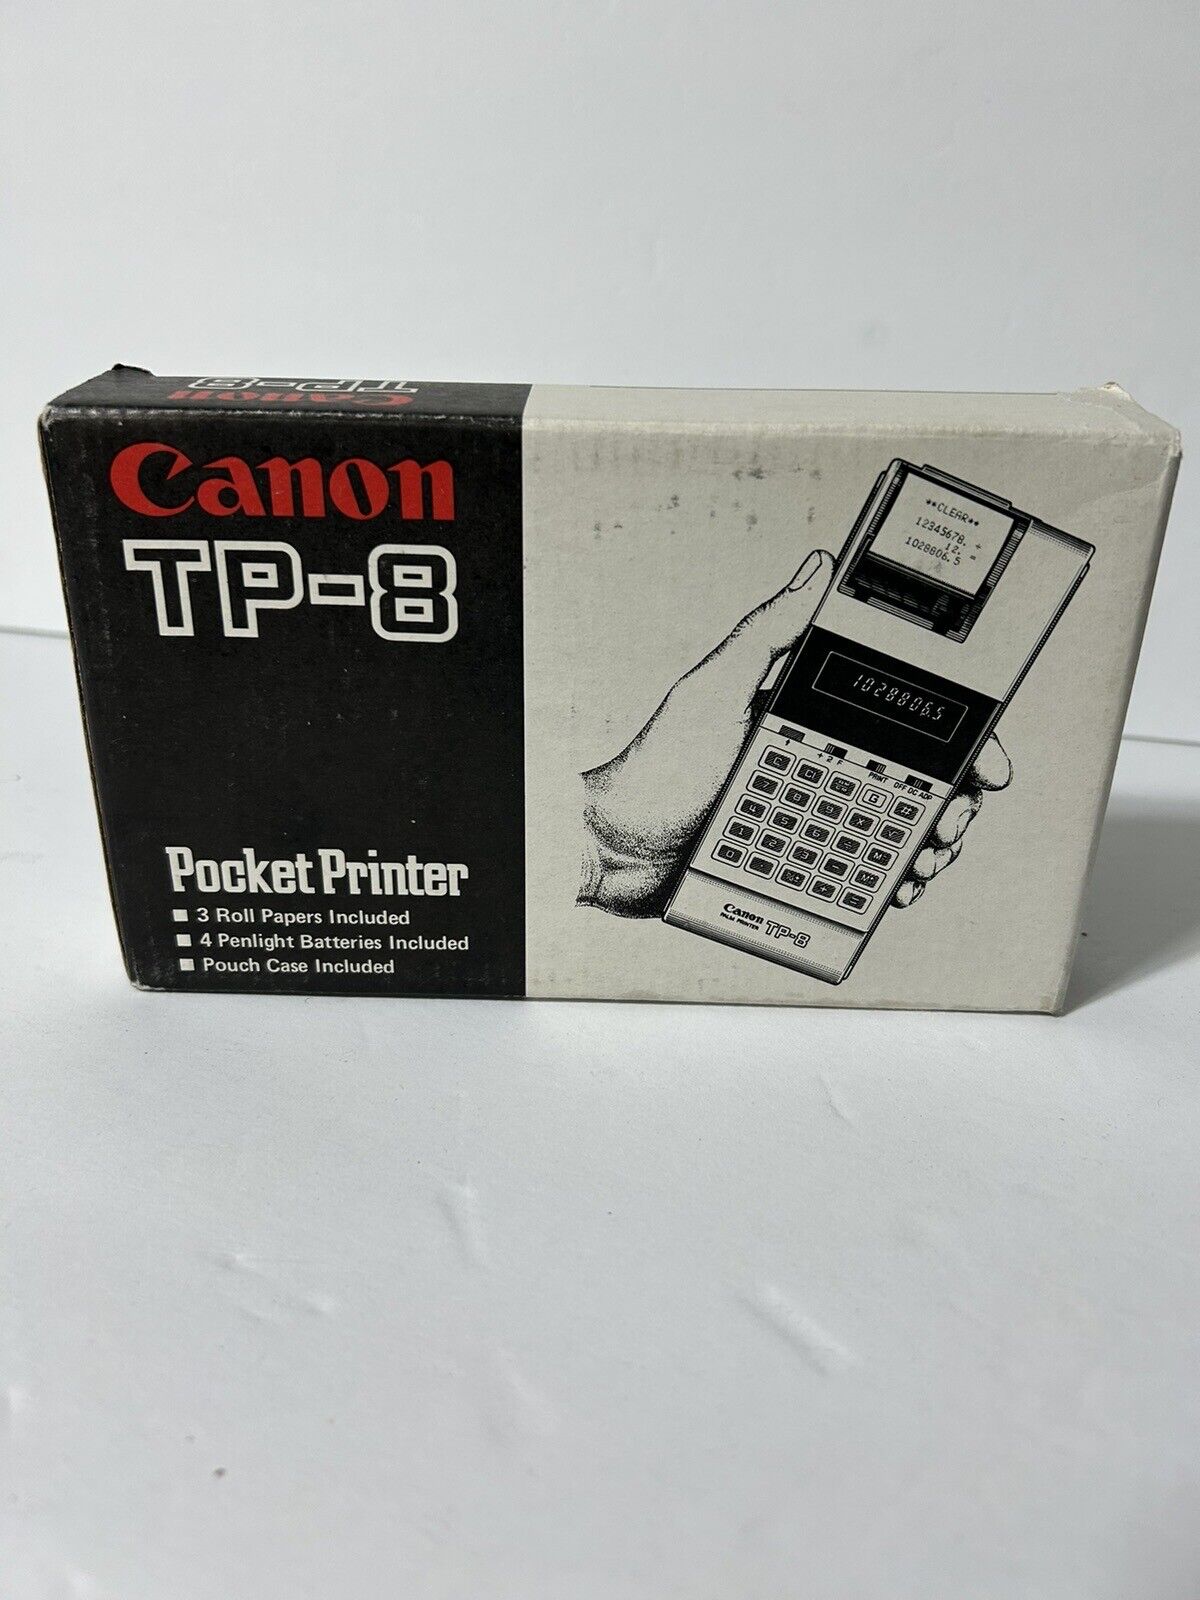 Vintage Canon TP-8 Pocket Printer & Calculator with Original Box, Manual & Case